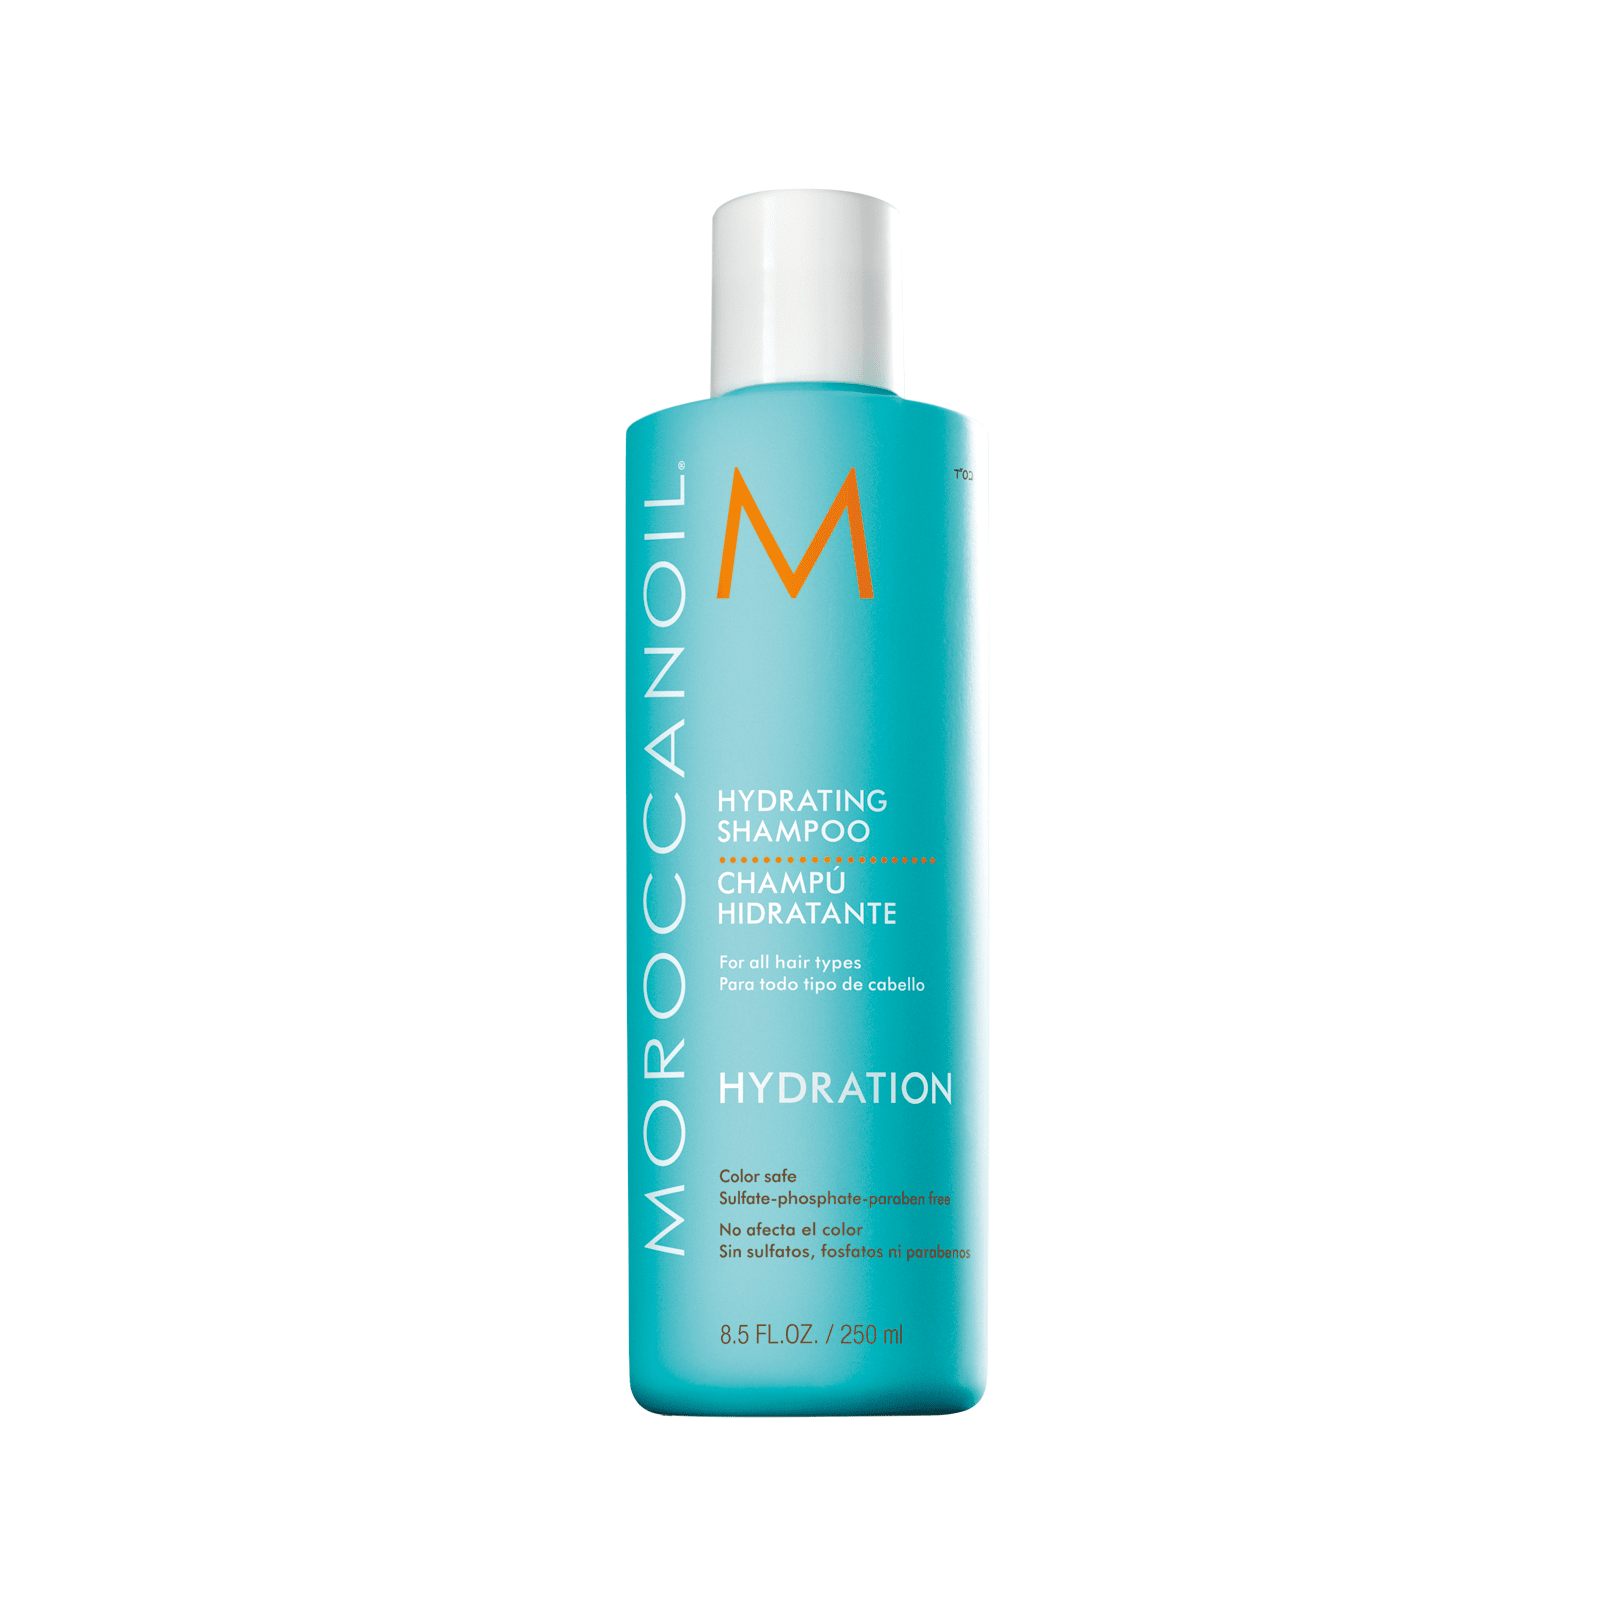 Moroccanoil Hydrating Shampoo 250mL - 28.99